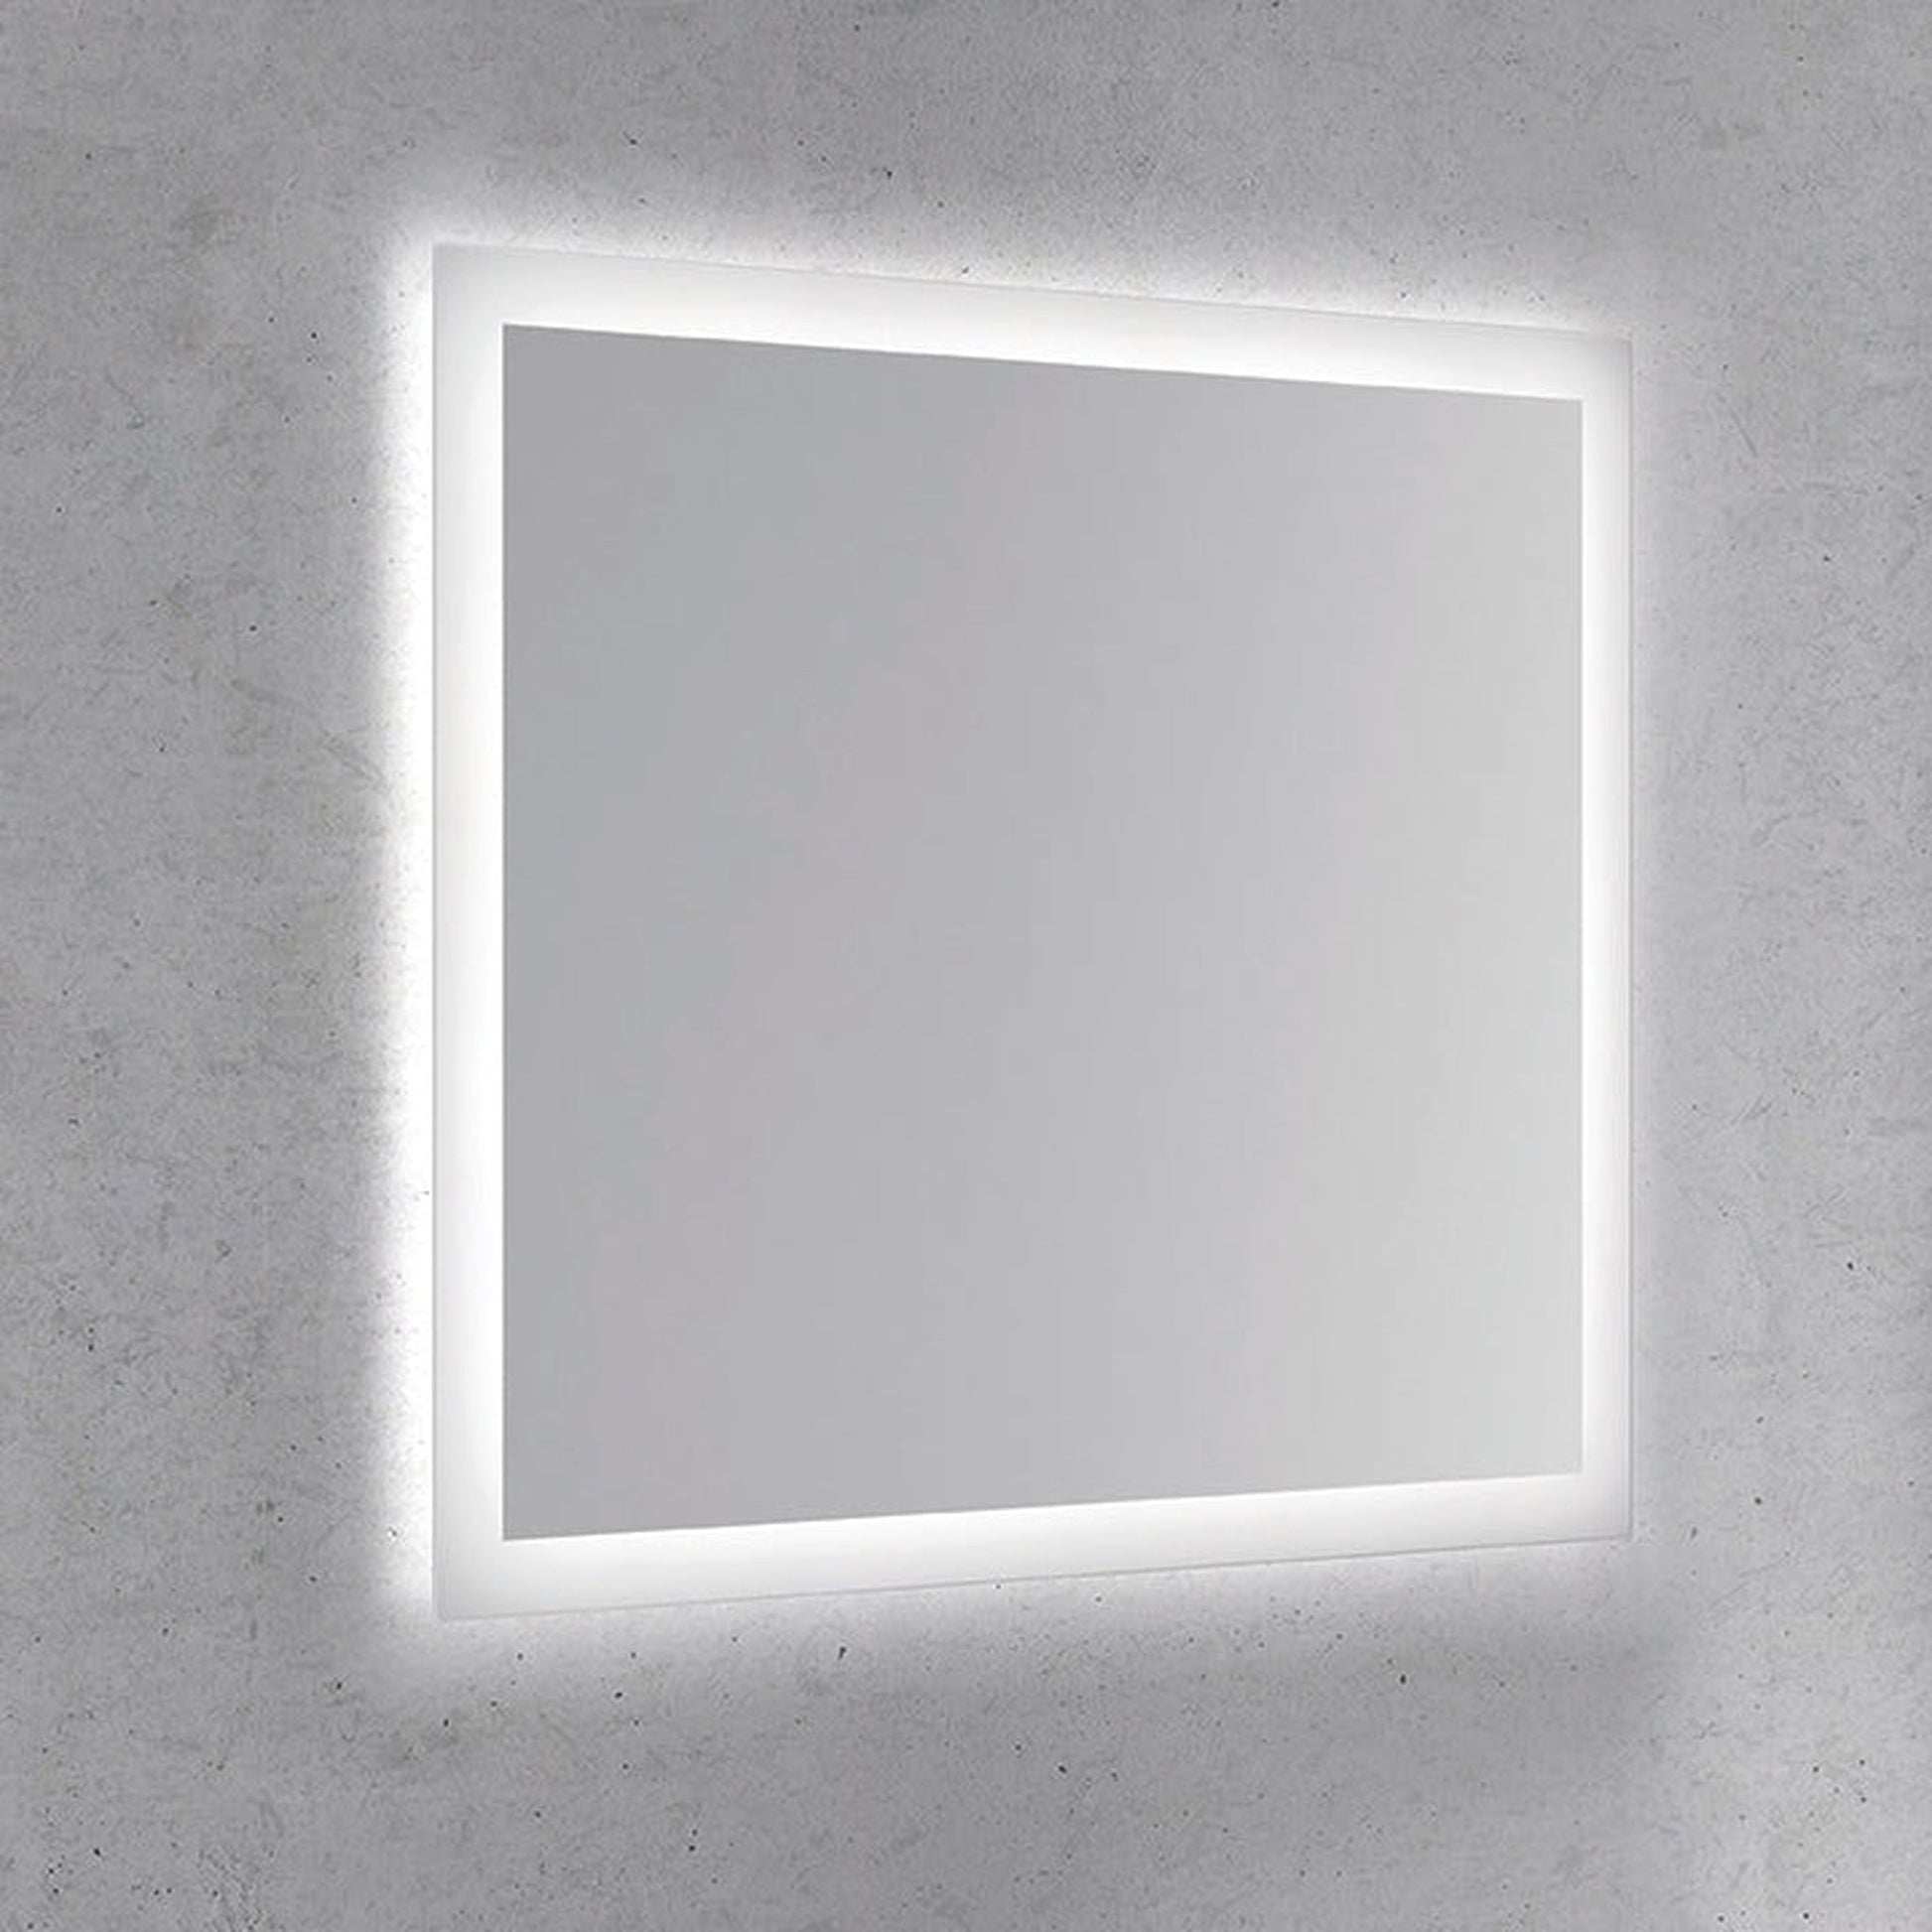 Royo Emma 32" x 32" Modern Square LED Mirror